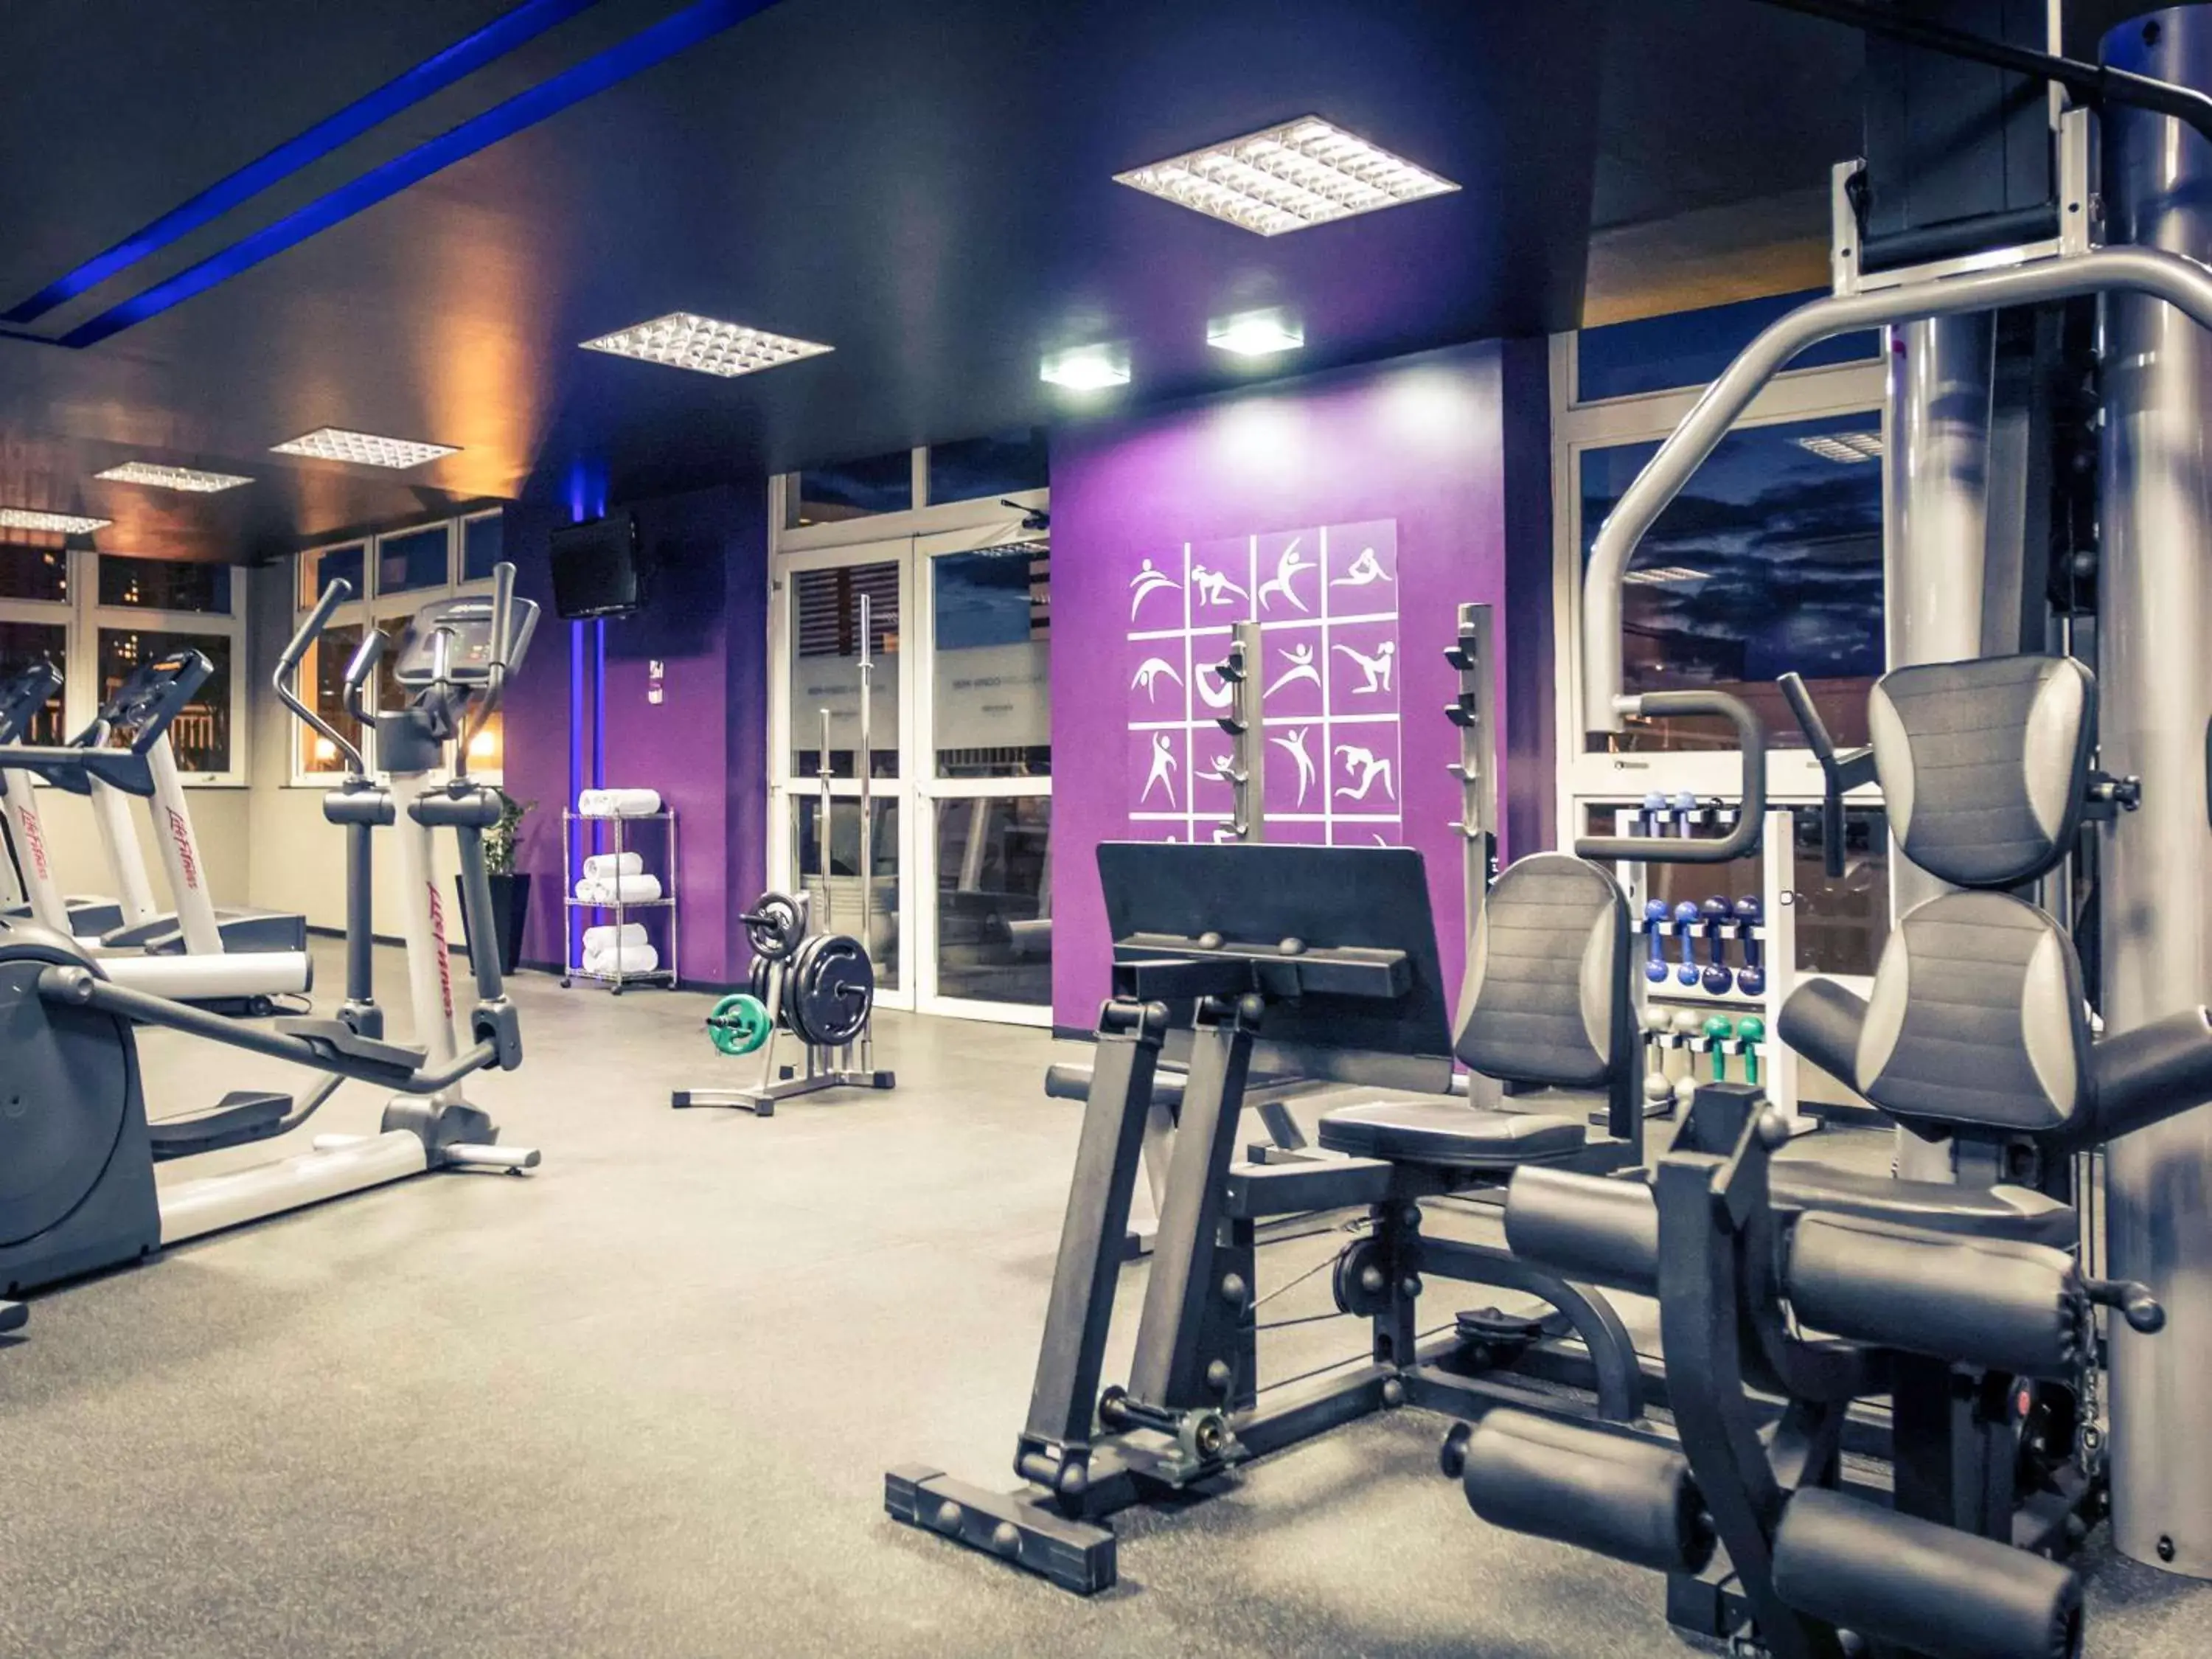 Fitness centre/facilities, Fitness Center/Facilities in Mercure Sao Jose dos Campos